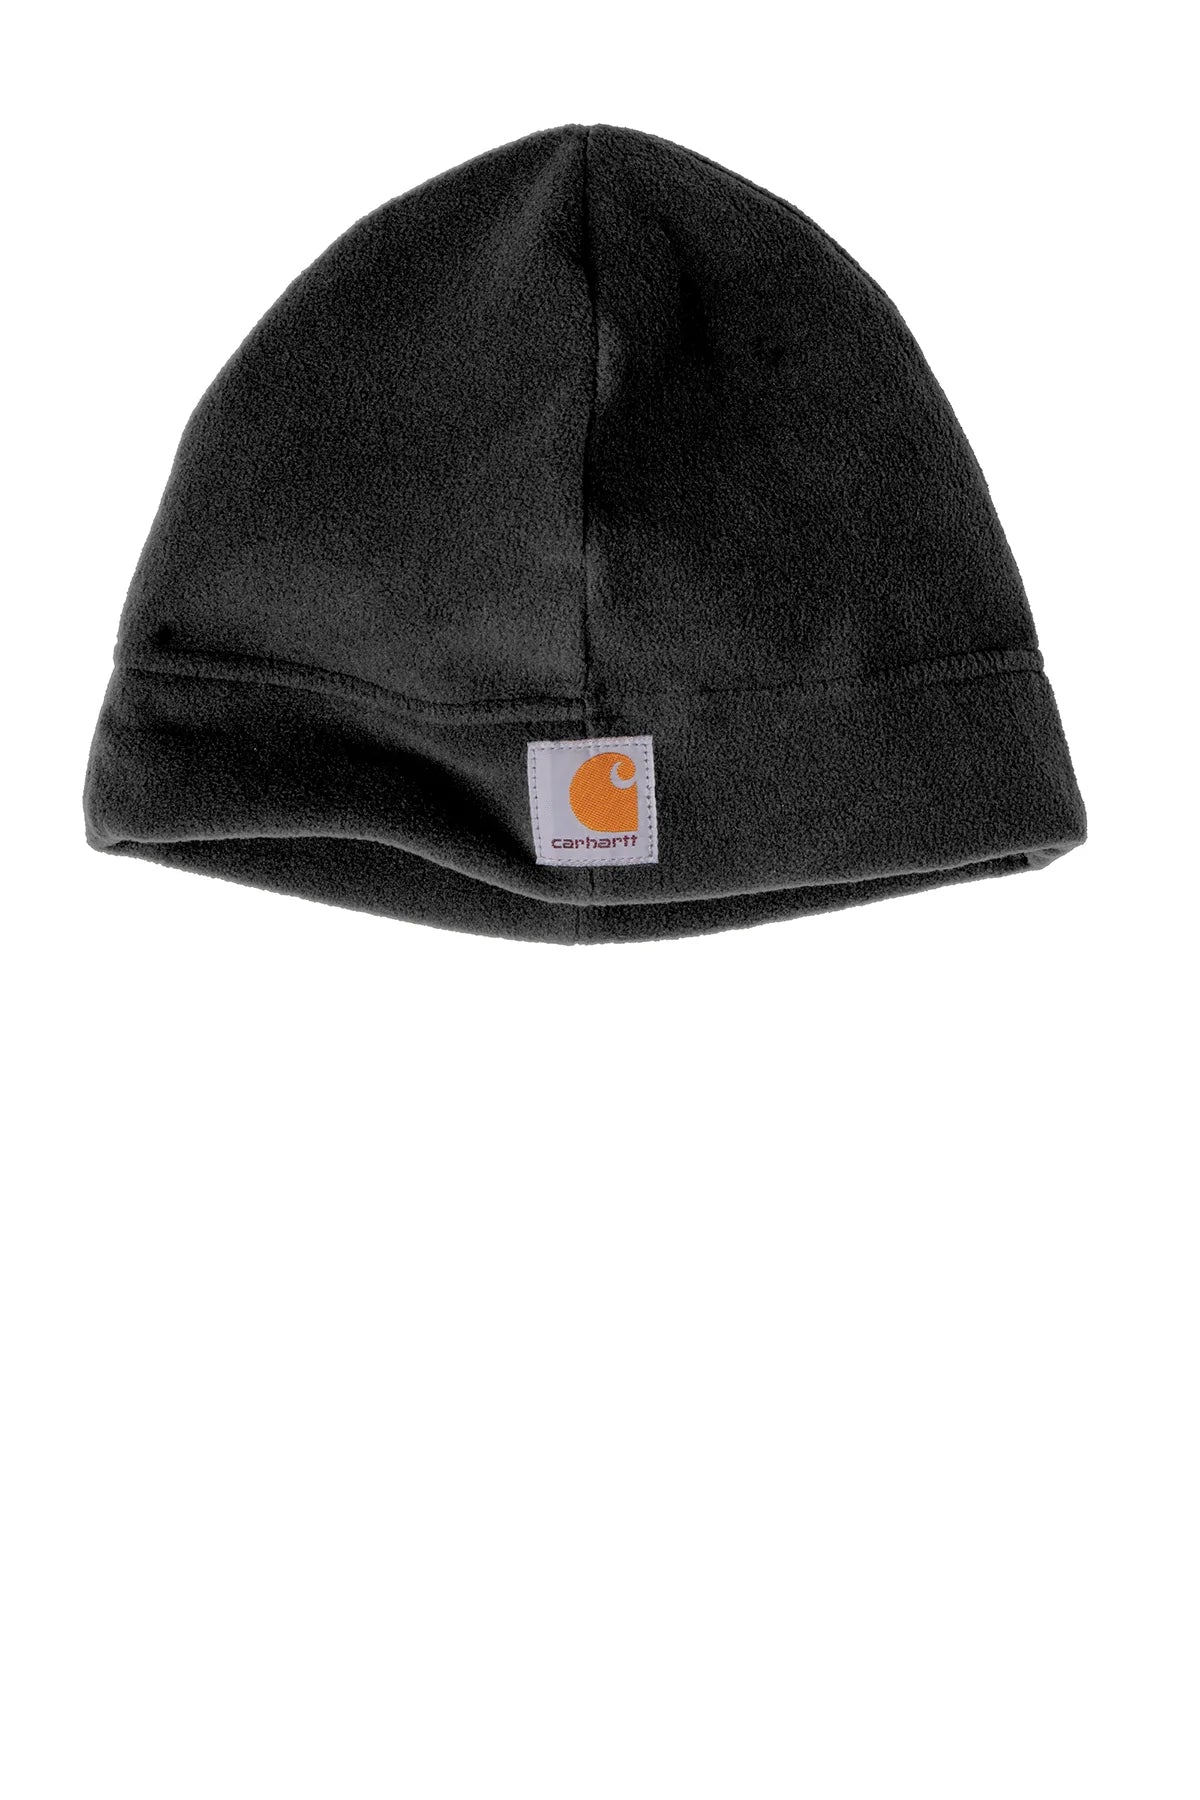 Custom Carhartt Fleece Hat CTA207 Black